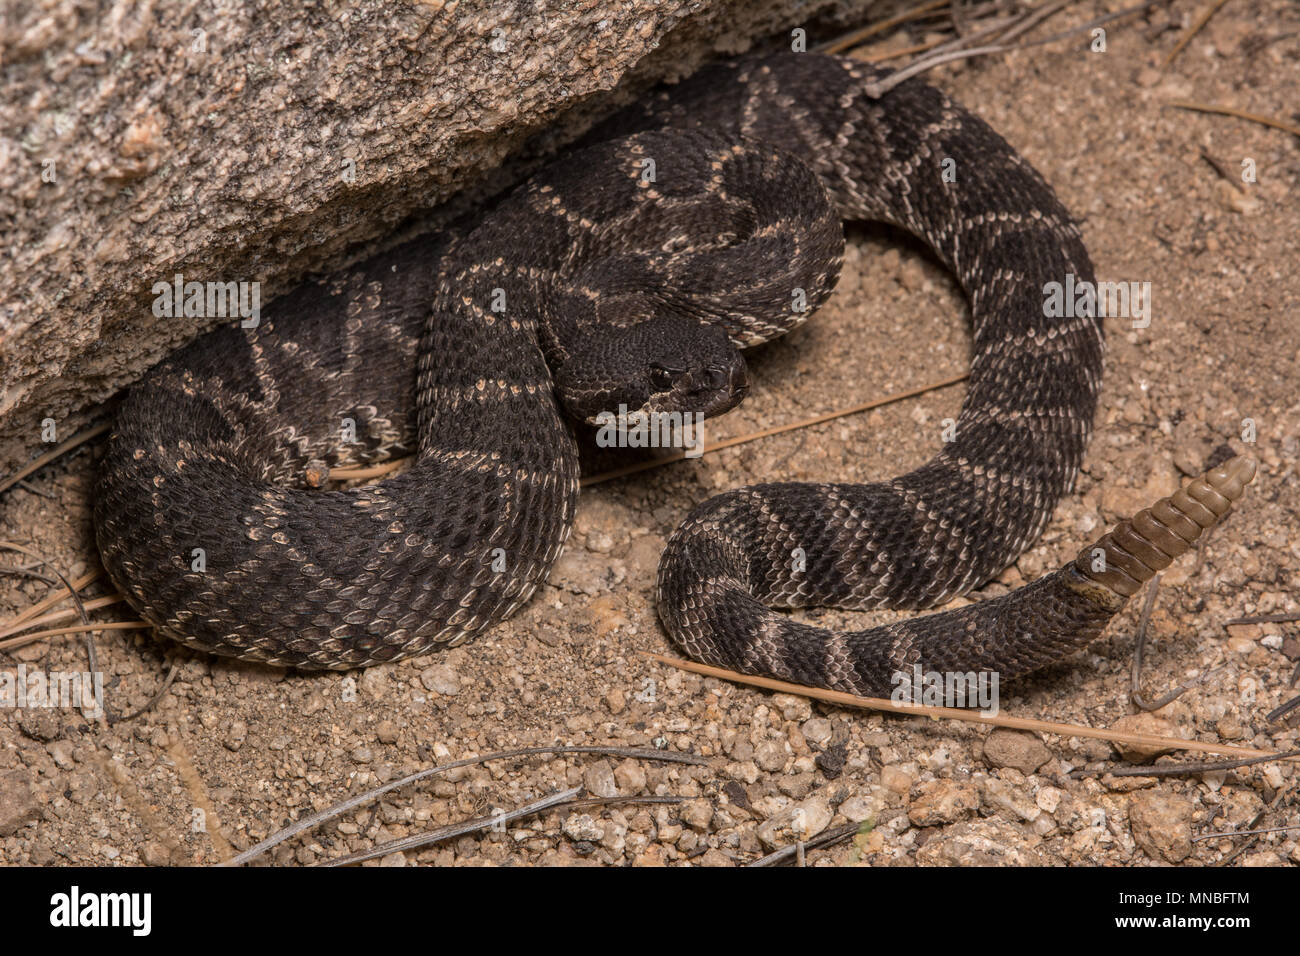 Southern Pacific Rattlesnake (Crotalus oreganus helleri) from the Sierra Jurarez, Baja California, Mexico. Stock Photo